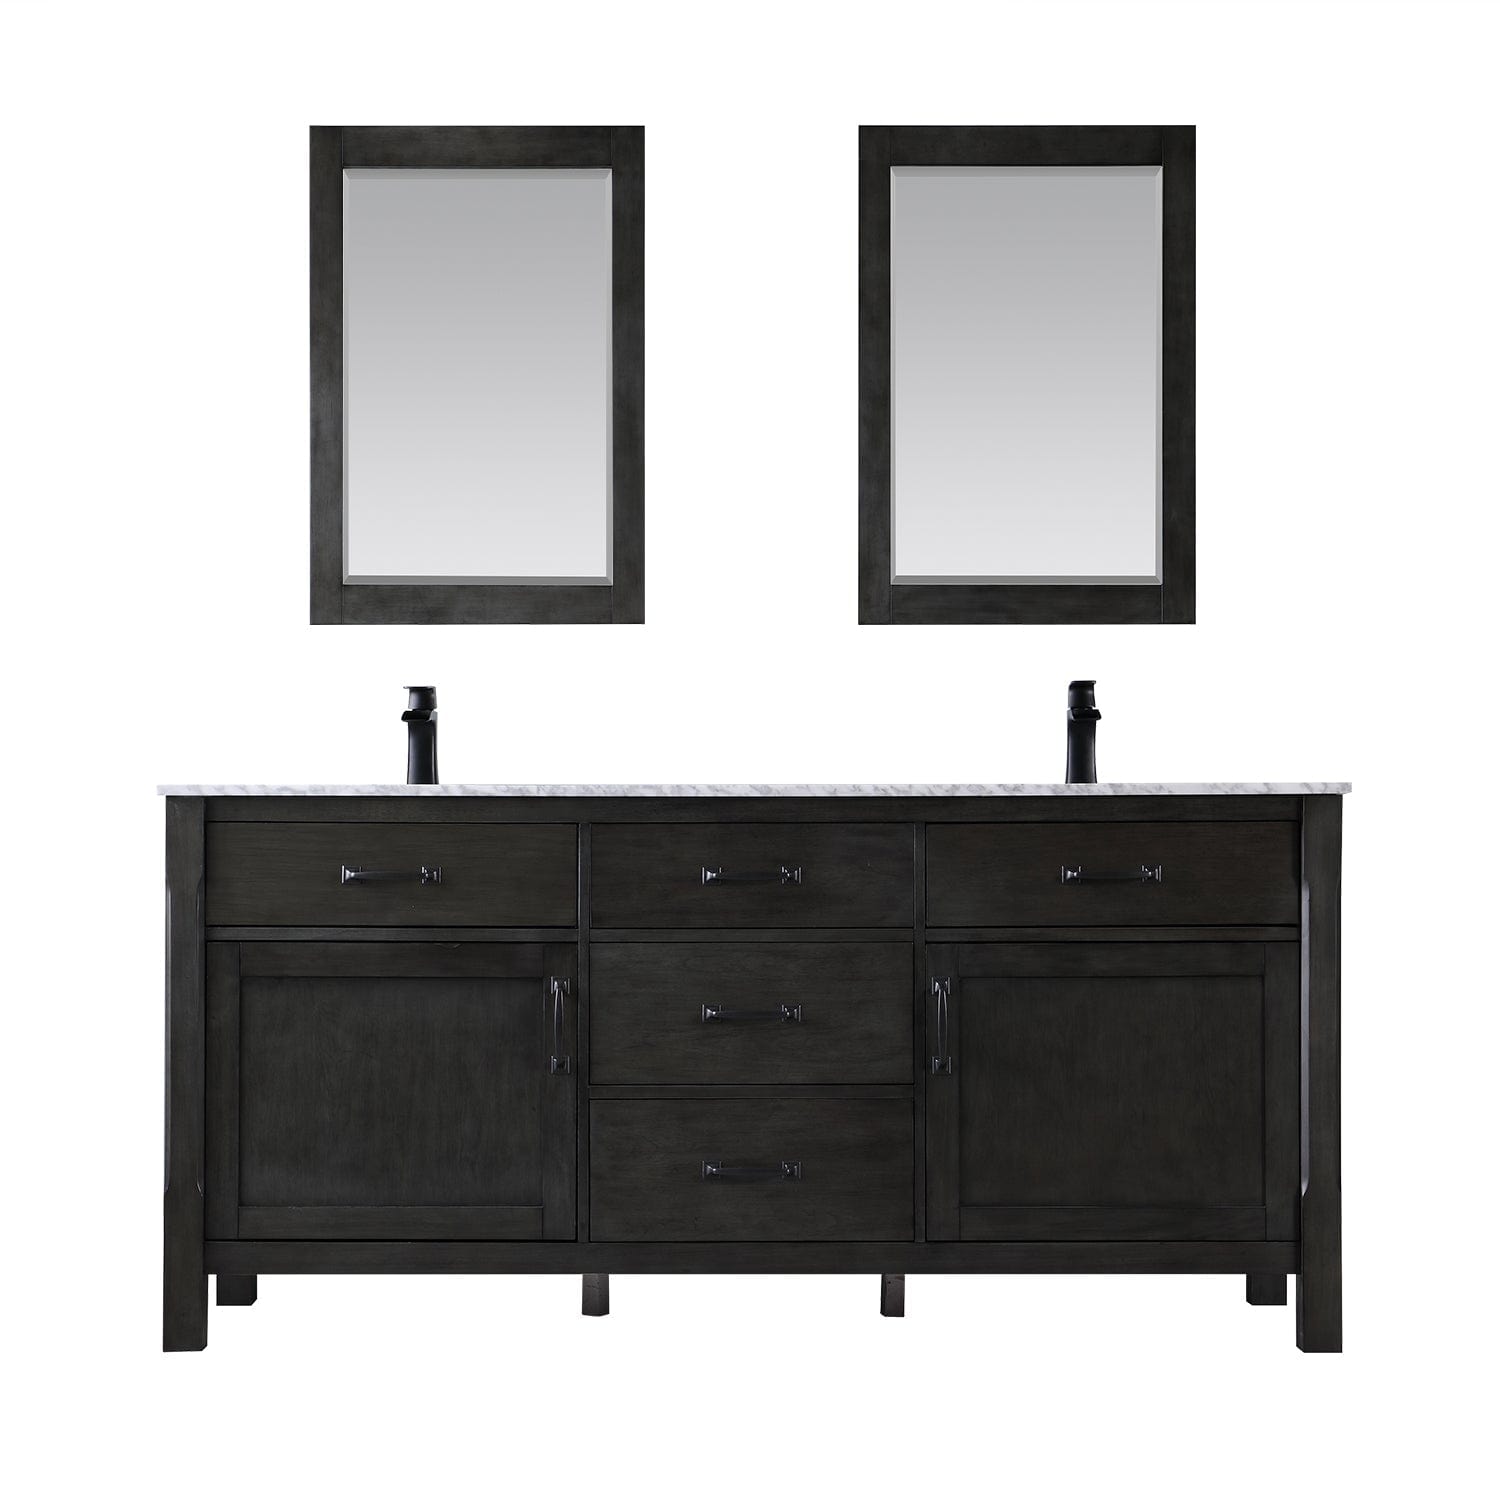 Altair Maribella 72" Double Bathroom Vanity Set in Rust Black and Carrara White Marble Countertop with Mirror 535072-RL-CA - Molaix631112970396Vanity535072-RL-CA